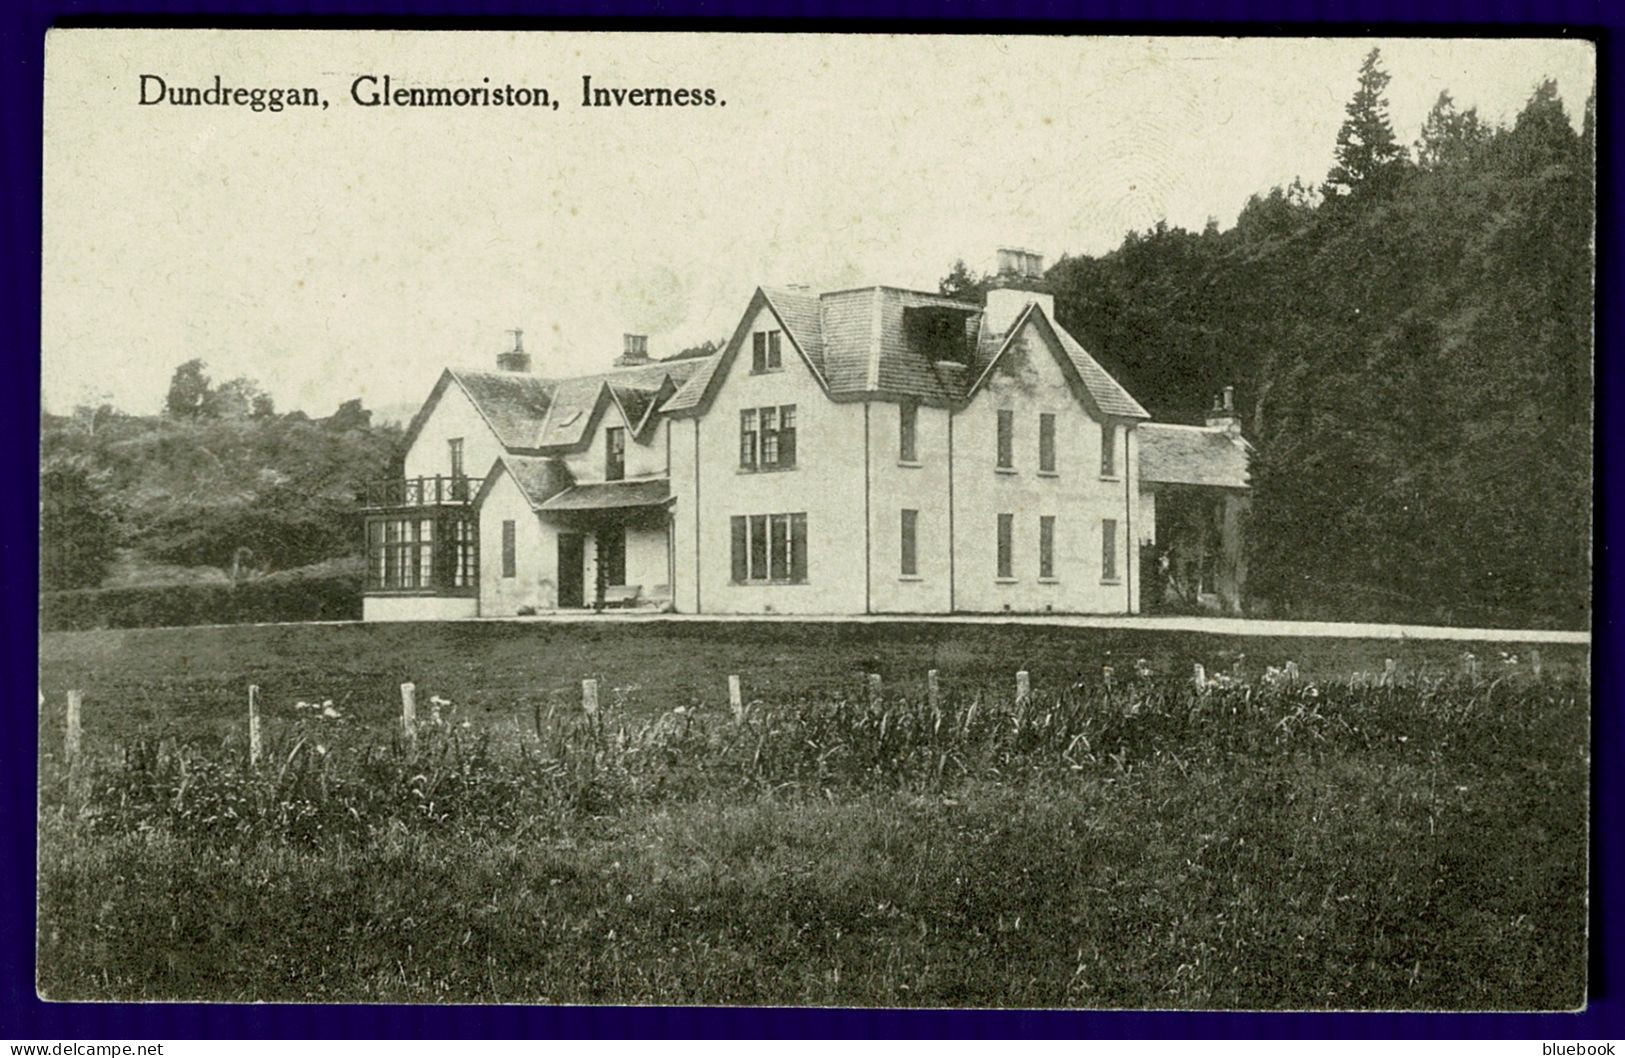 Ref 1638 - Early Postcard - Dundreggan - Glenmoiston Inverness Scotland - Inverness-shire